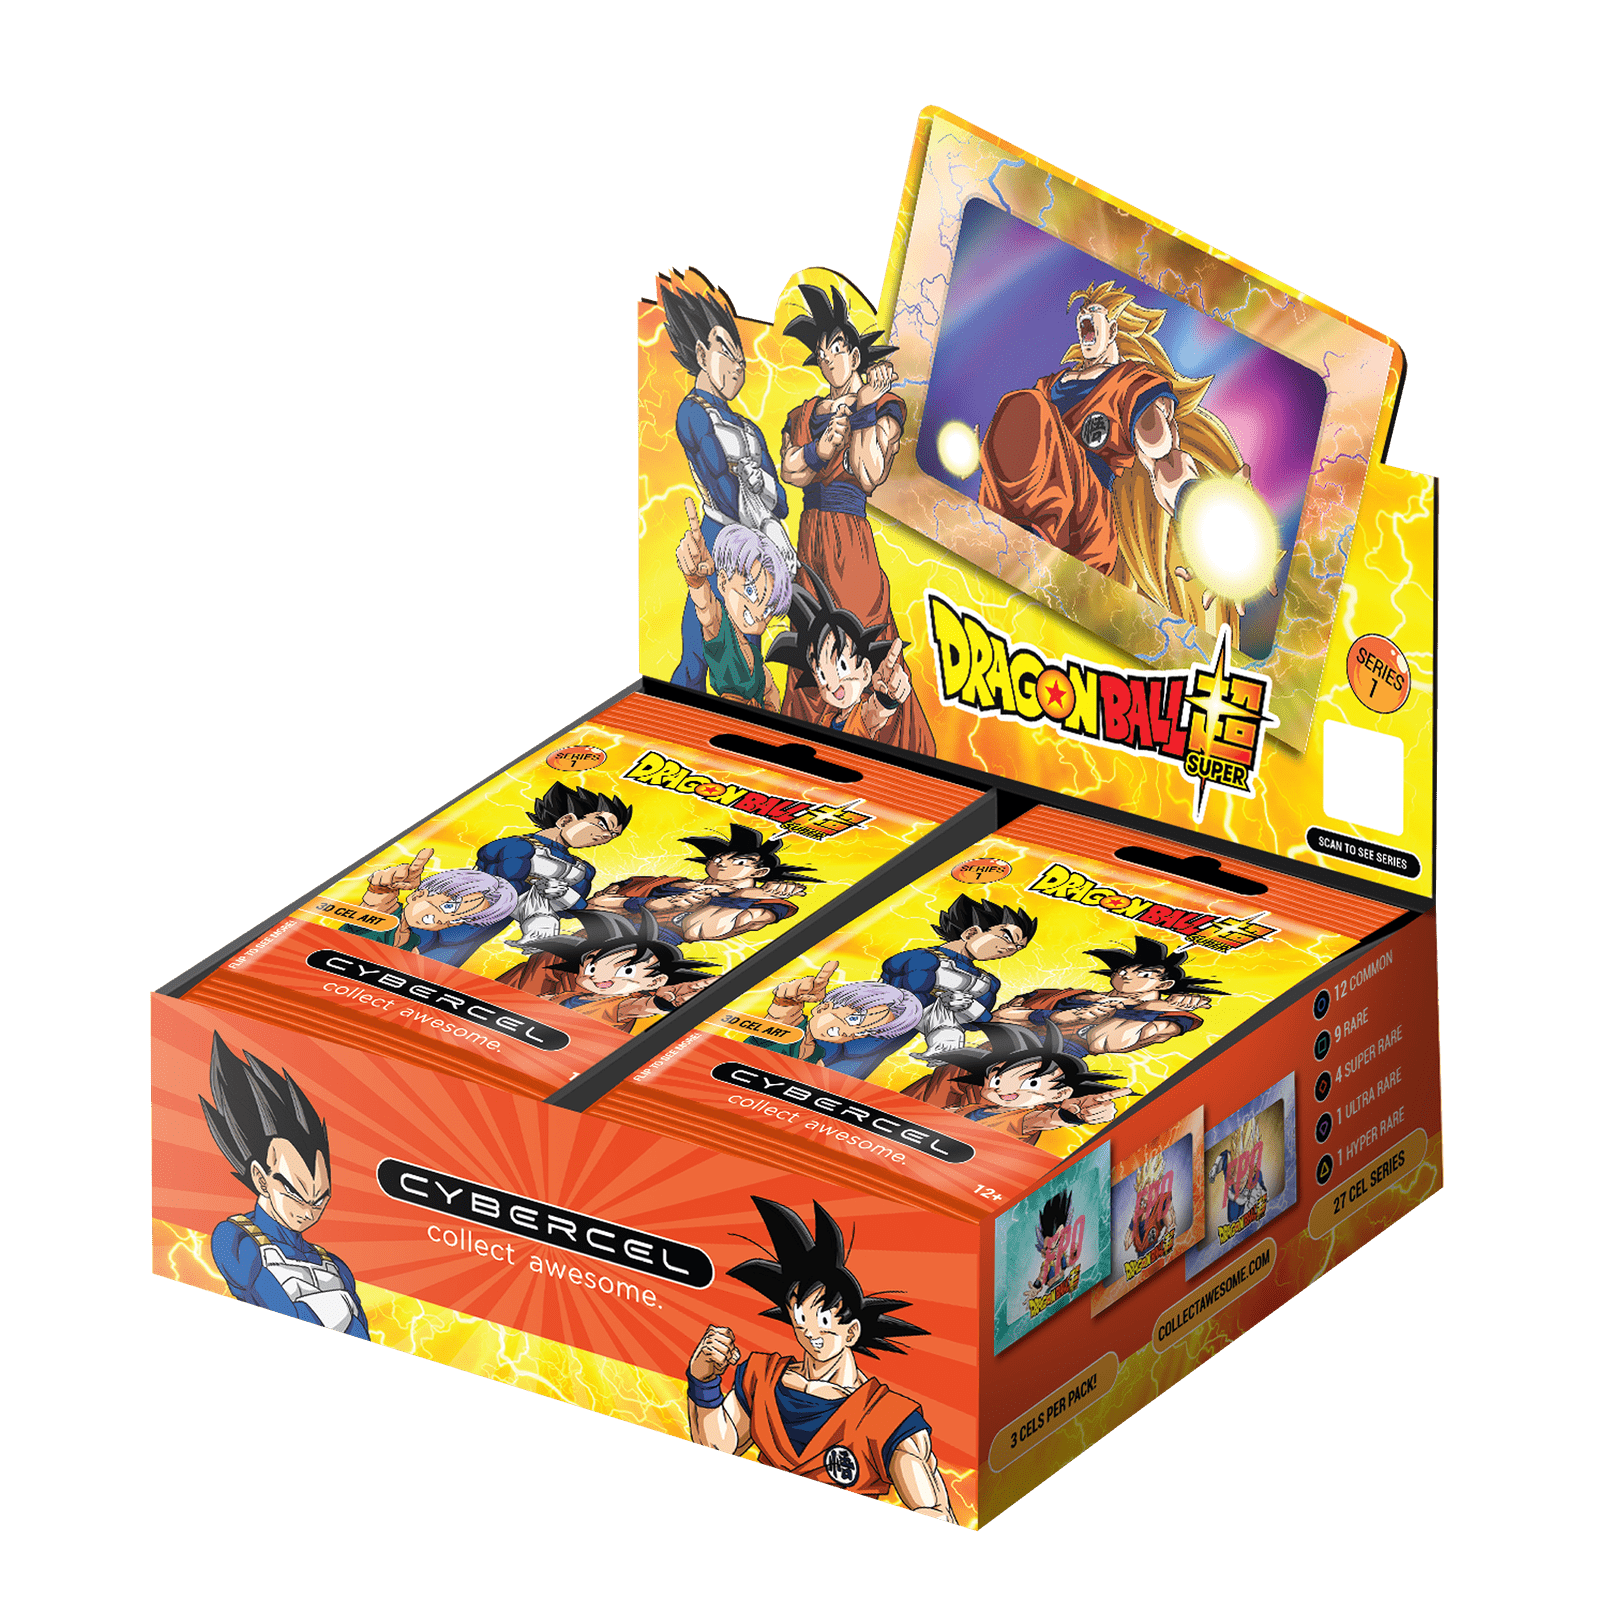 CYBERCEL TRADING CARDS - Dragon Ball Z - 1x Booster Box